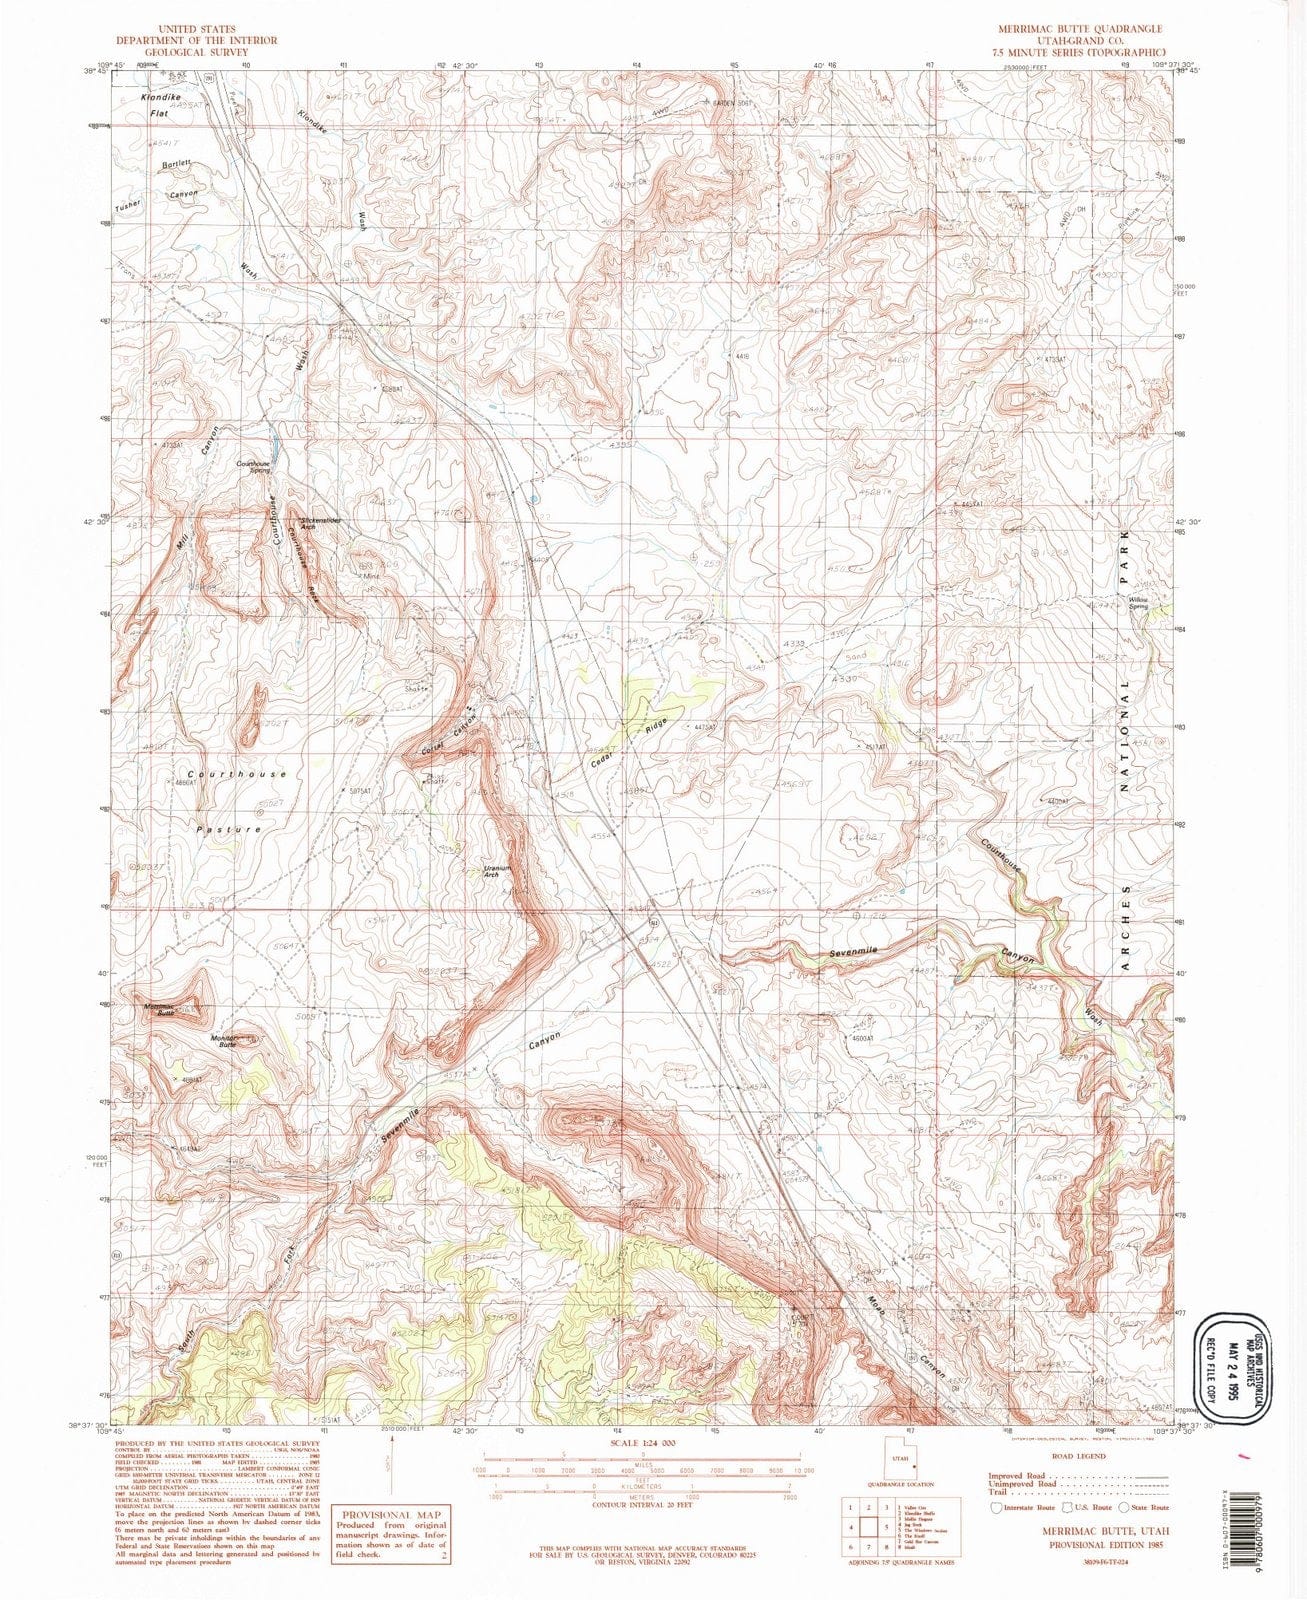 1985 Merrimac Butte, UT - Utah - USGS Topographic Map